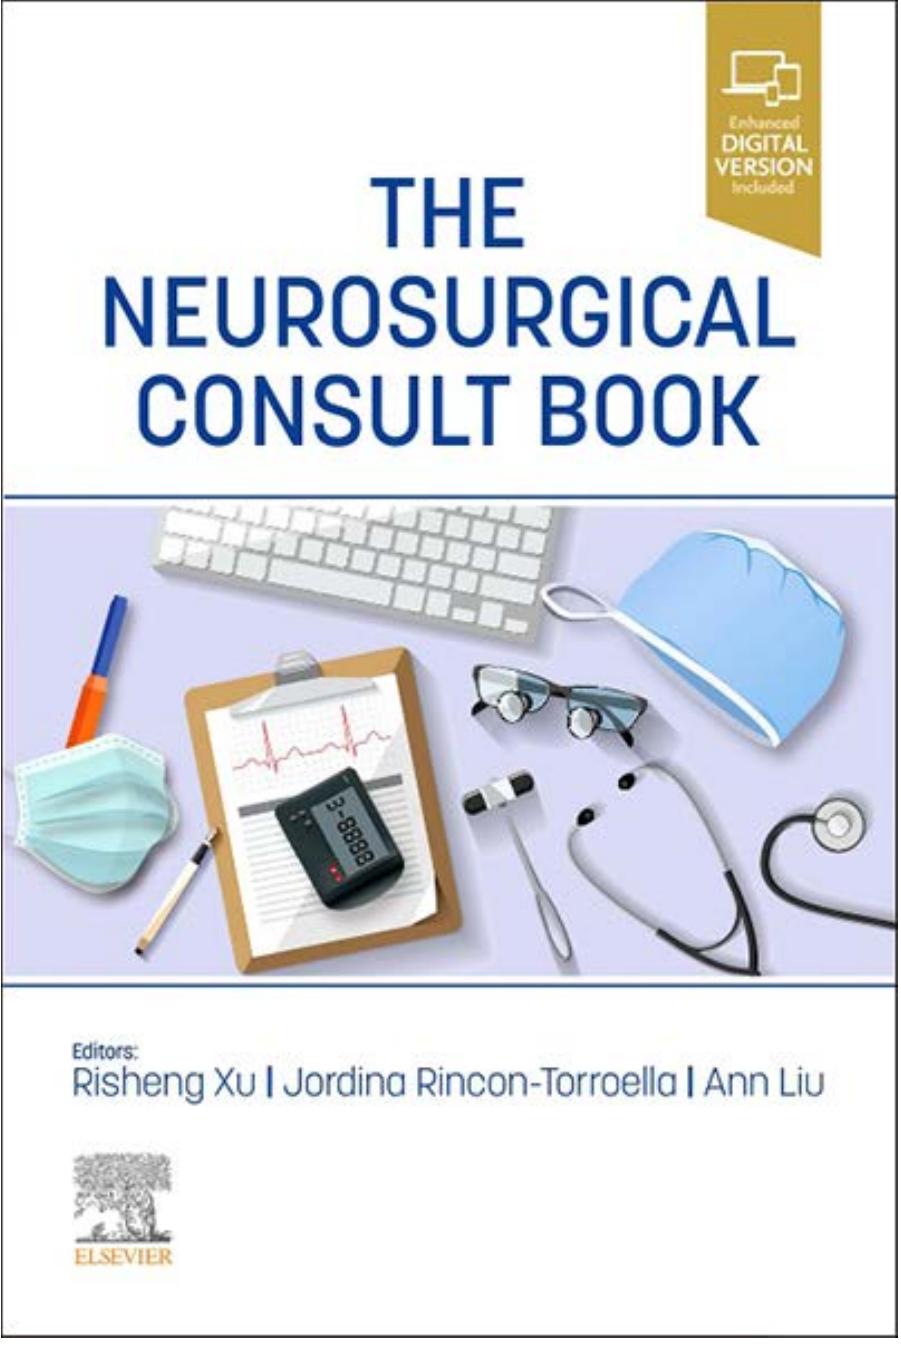 The Neurosurgical Consult Book by Risheng Xu Jordina Rincon-Torroella Ann Liu